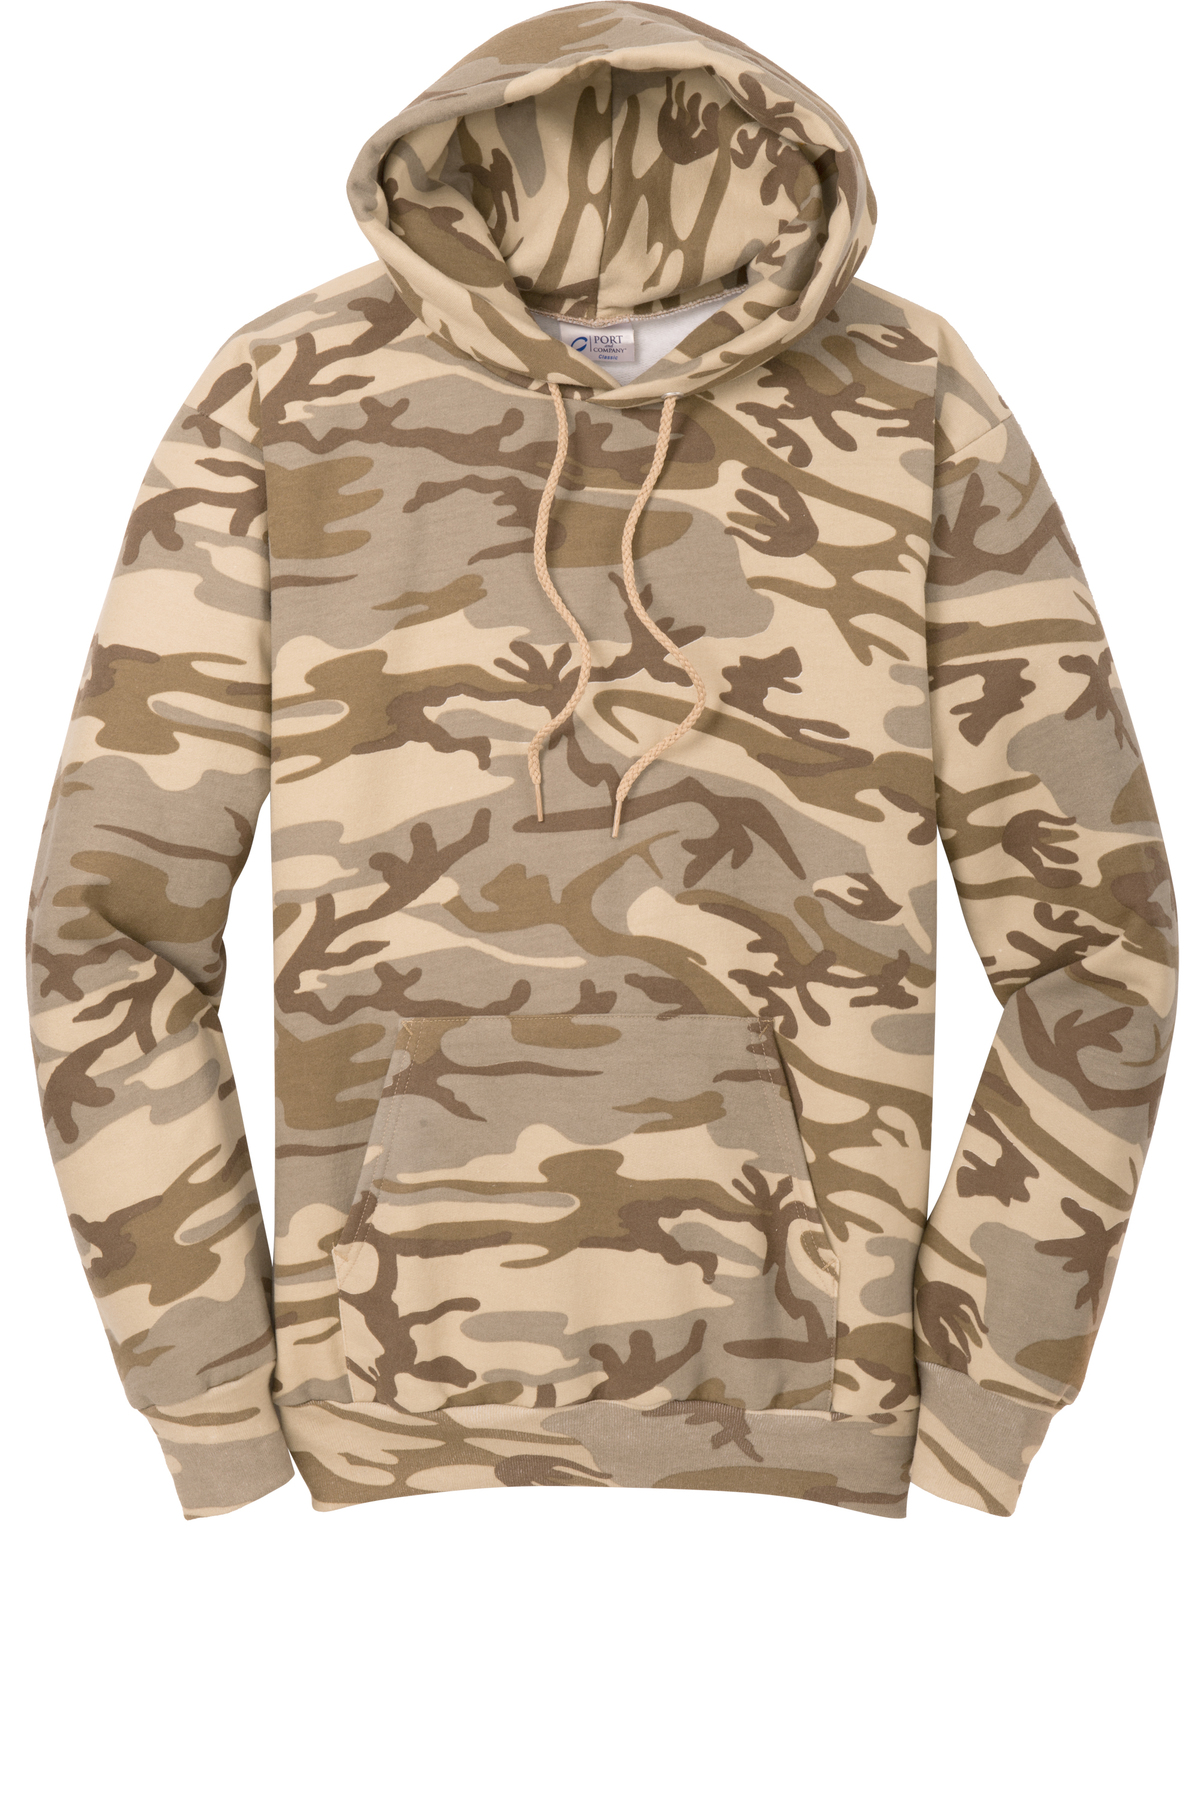 Desert Camouflage Pattern Brushed Fleece Hoodie Sweatshirt